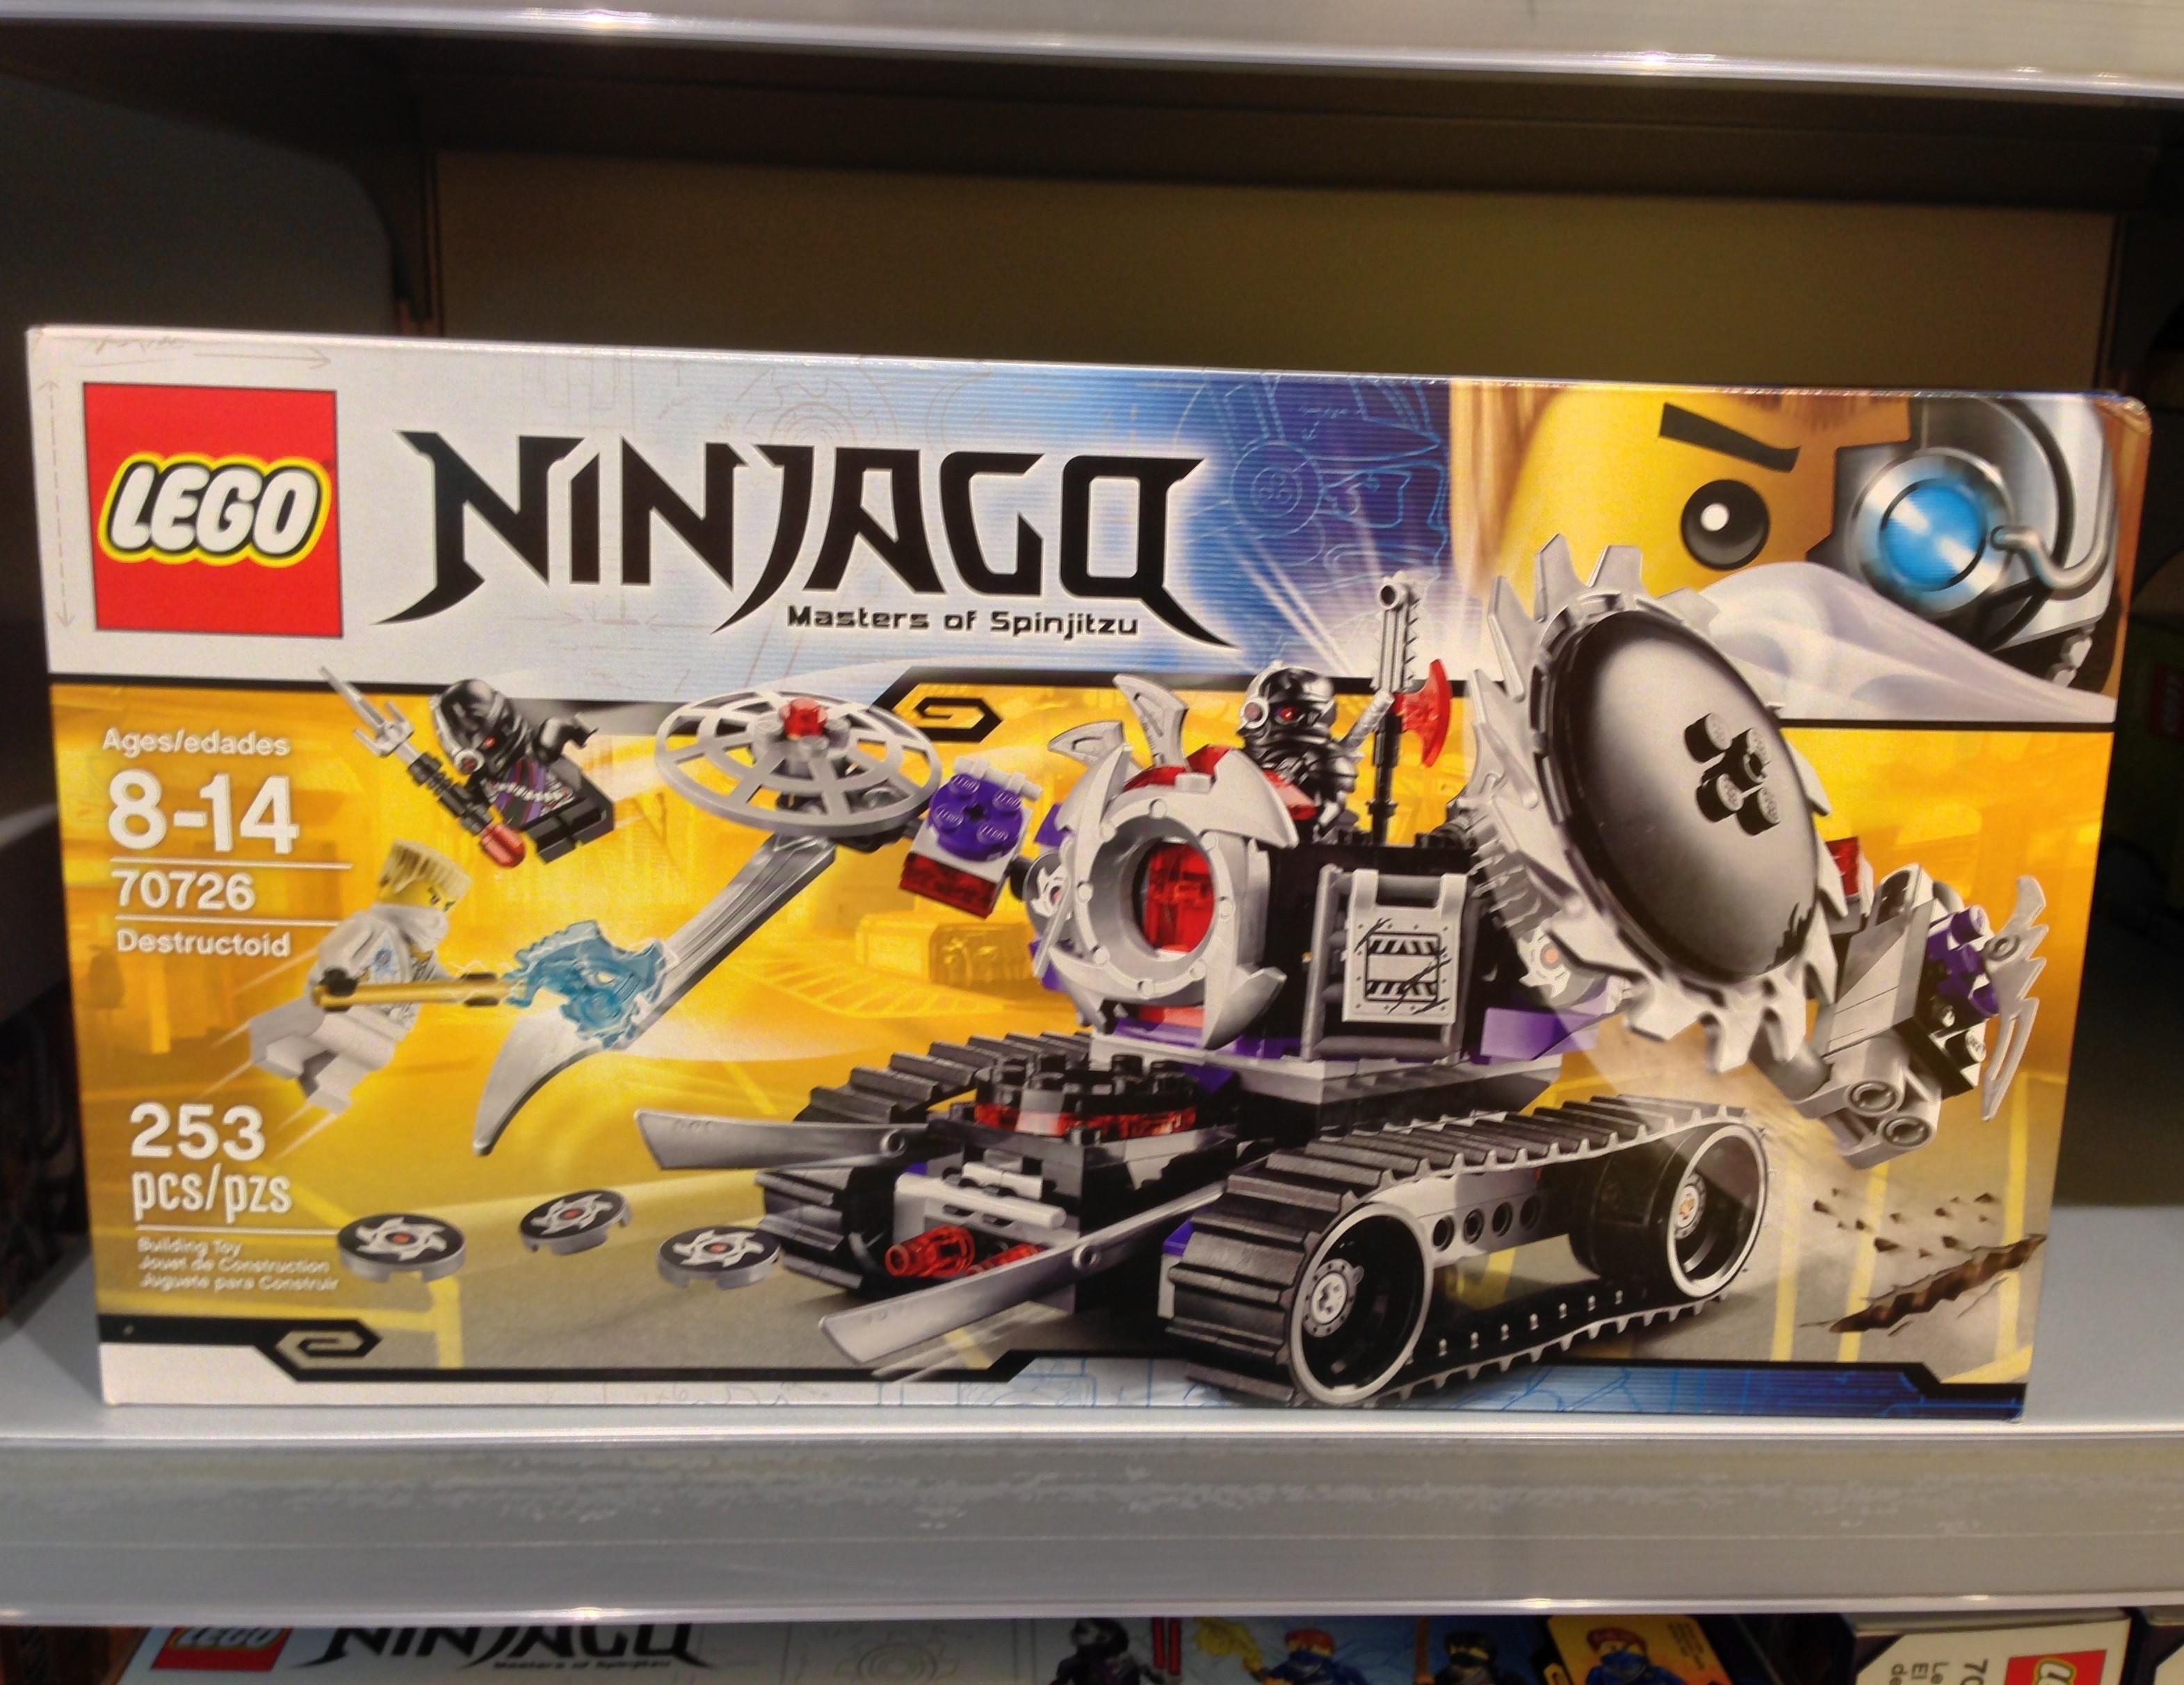 2014 LEGO 70726 Destructoid Ninjago Set Released in Stores! - Bricks and Bloks